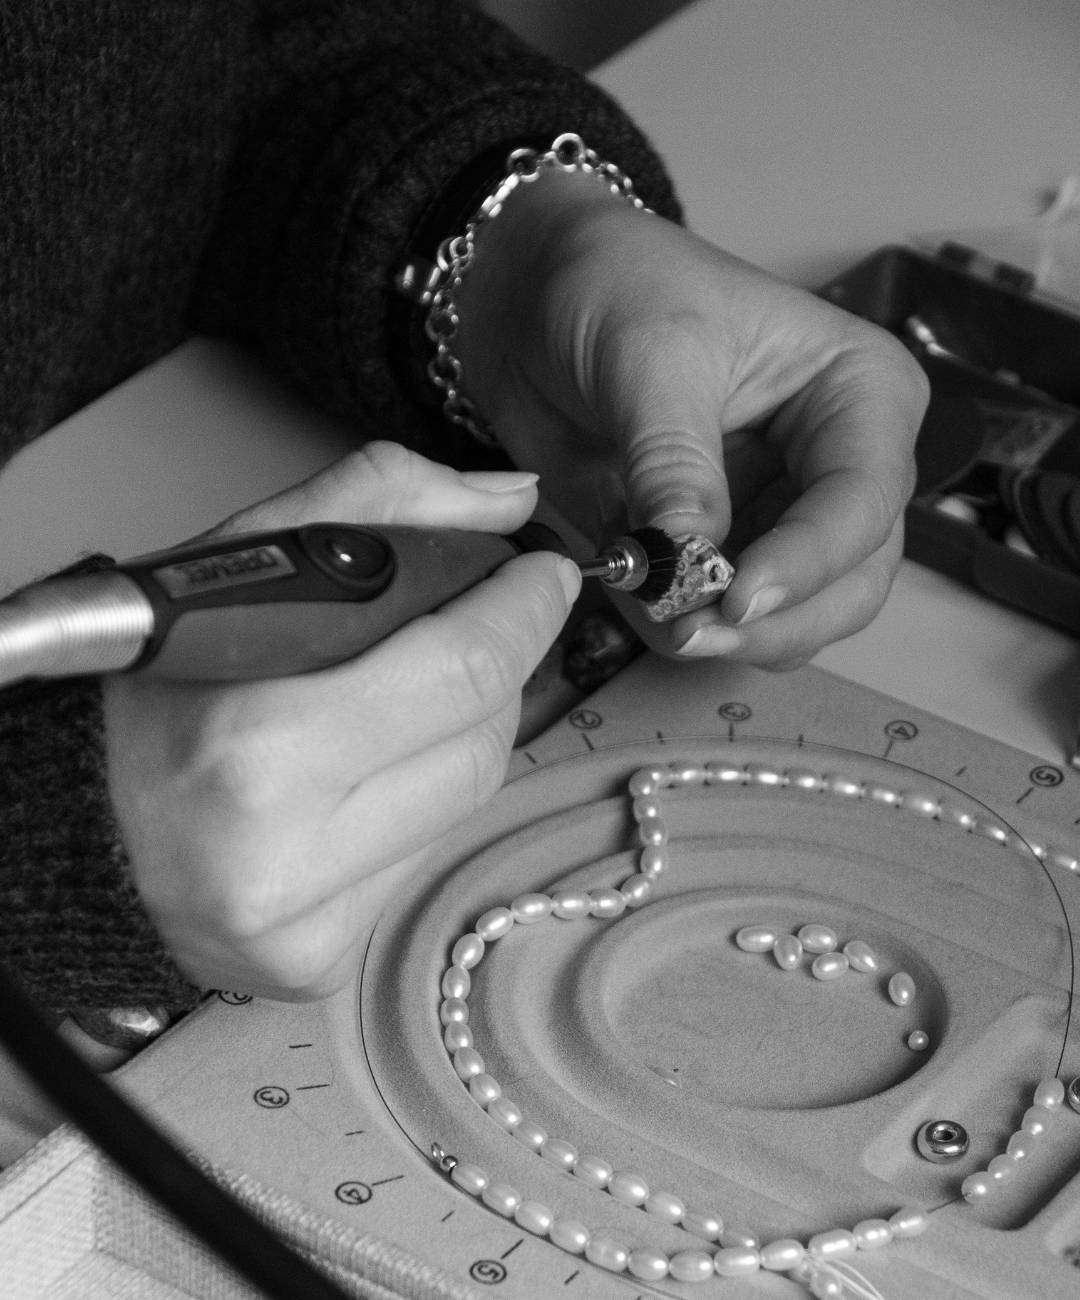 handmade sustainable jewelry from Hamburg, Germany by LLR Studios